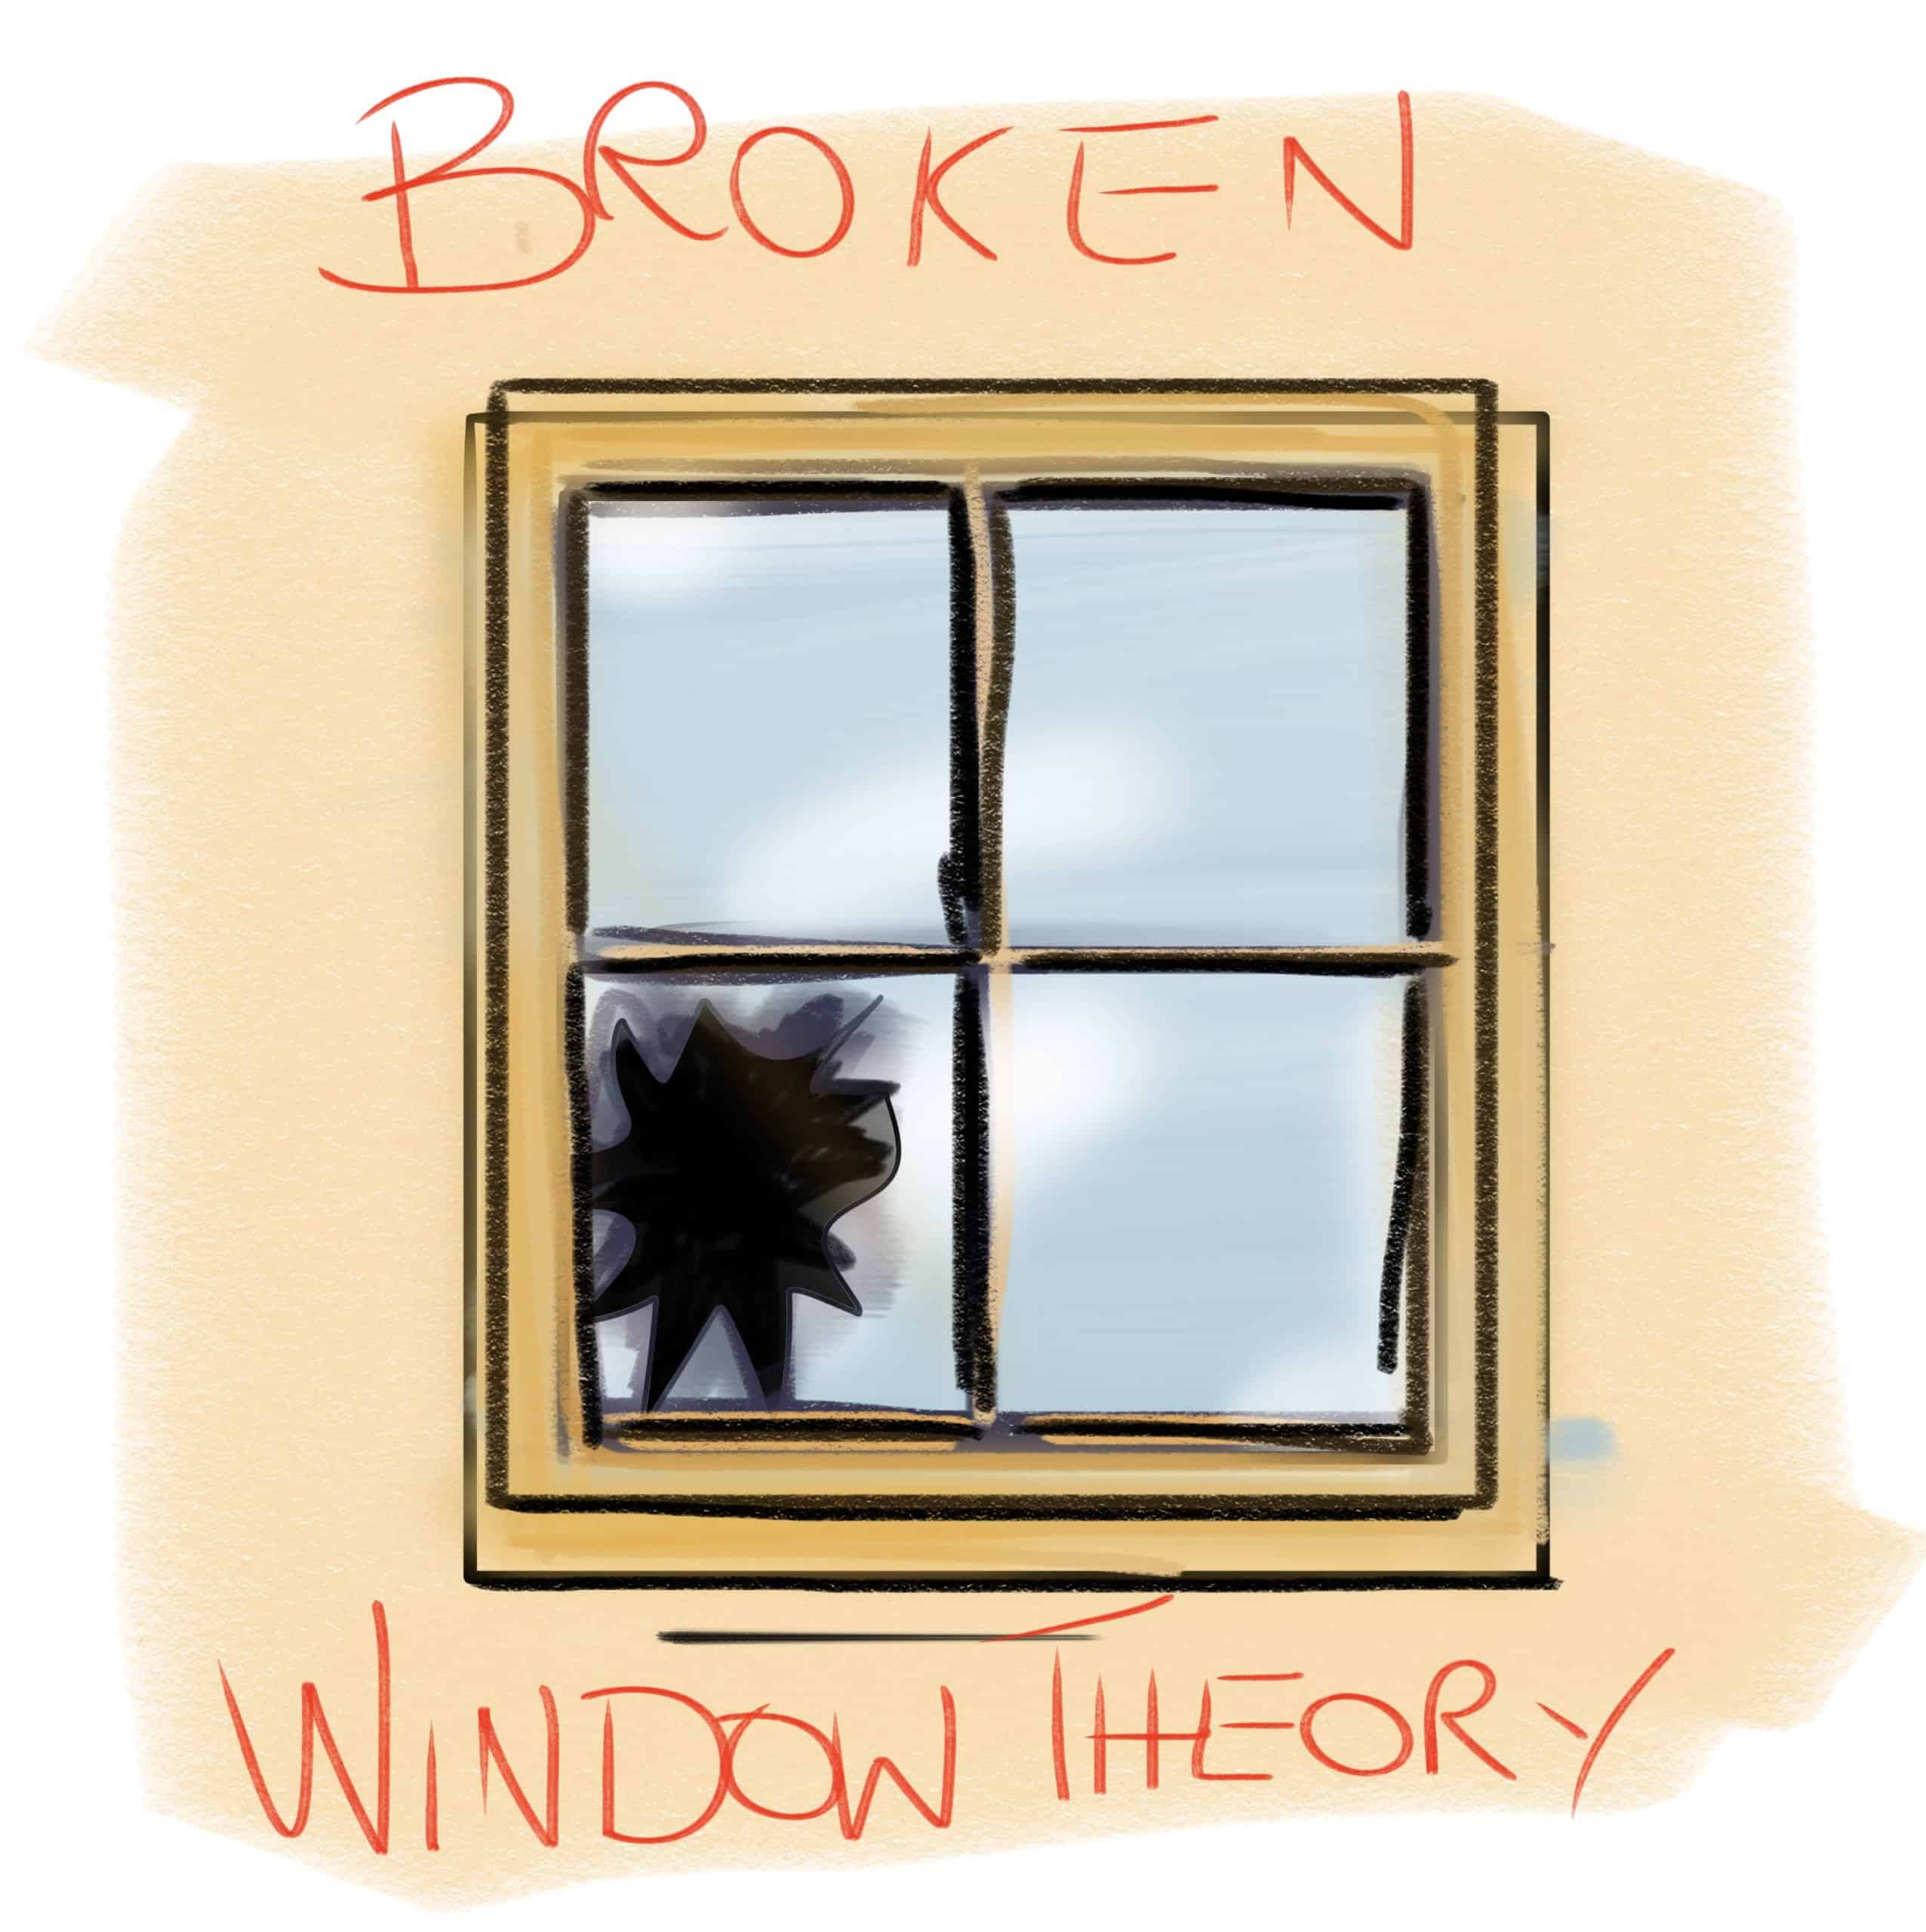 broken window theory debunked